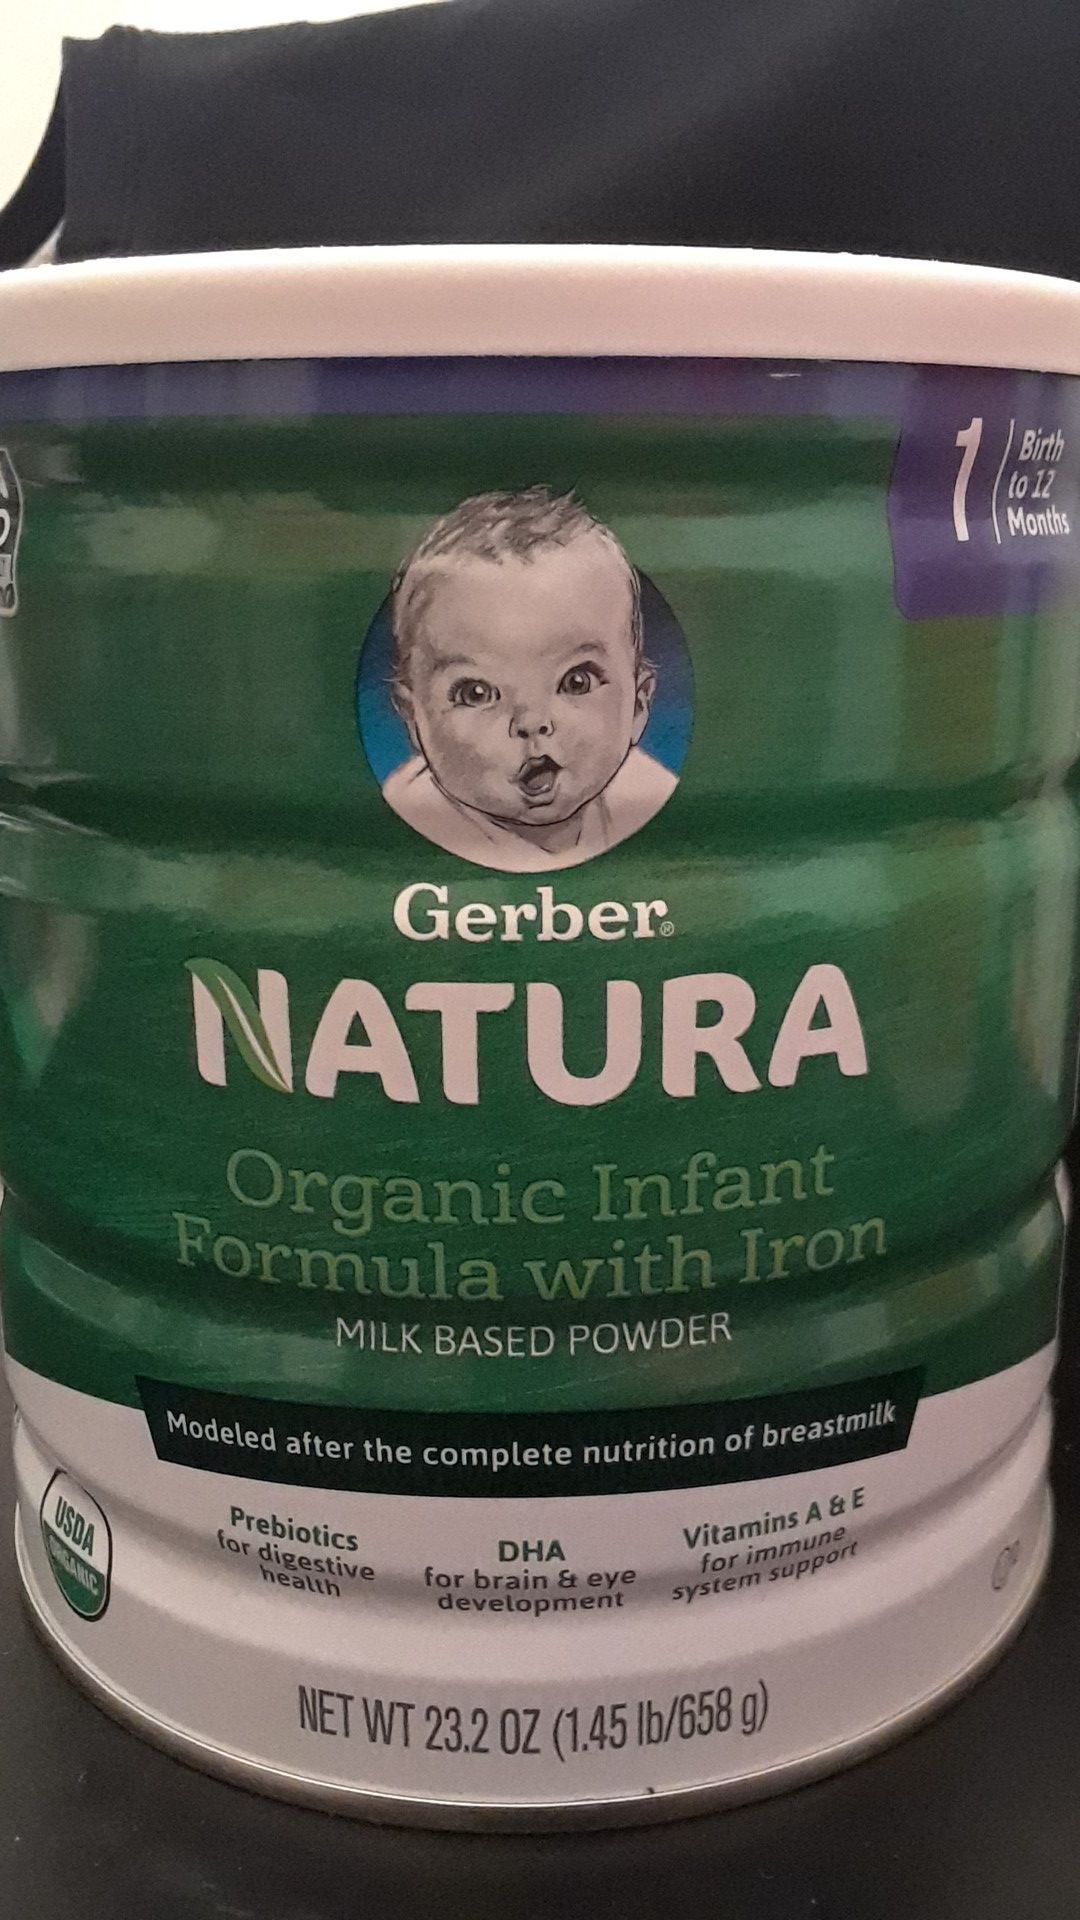 Gerber Natura Organic Infant Formula